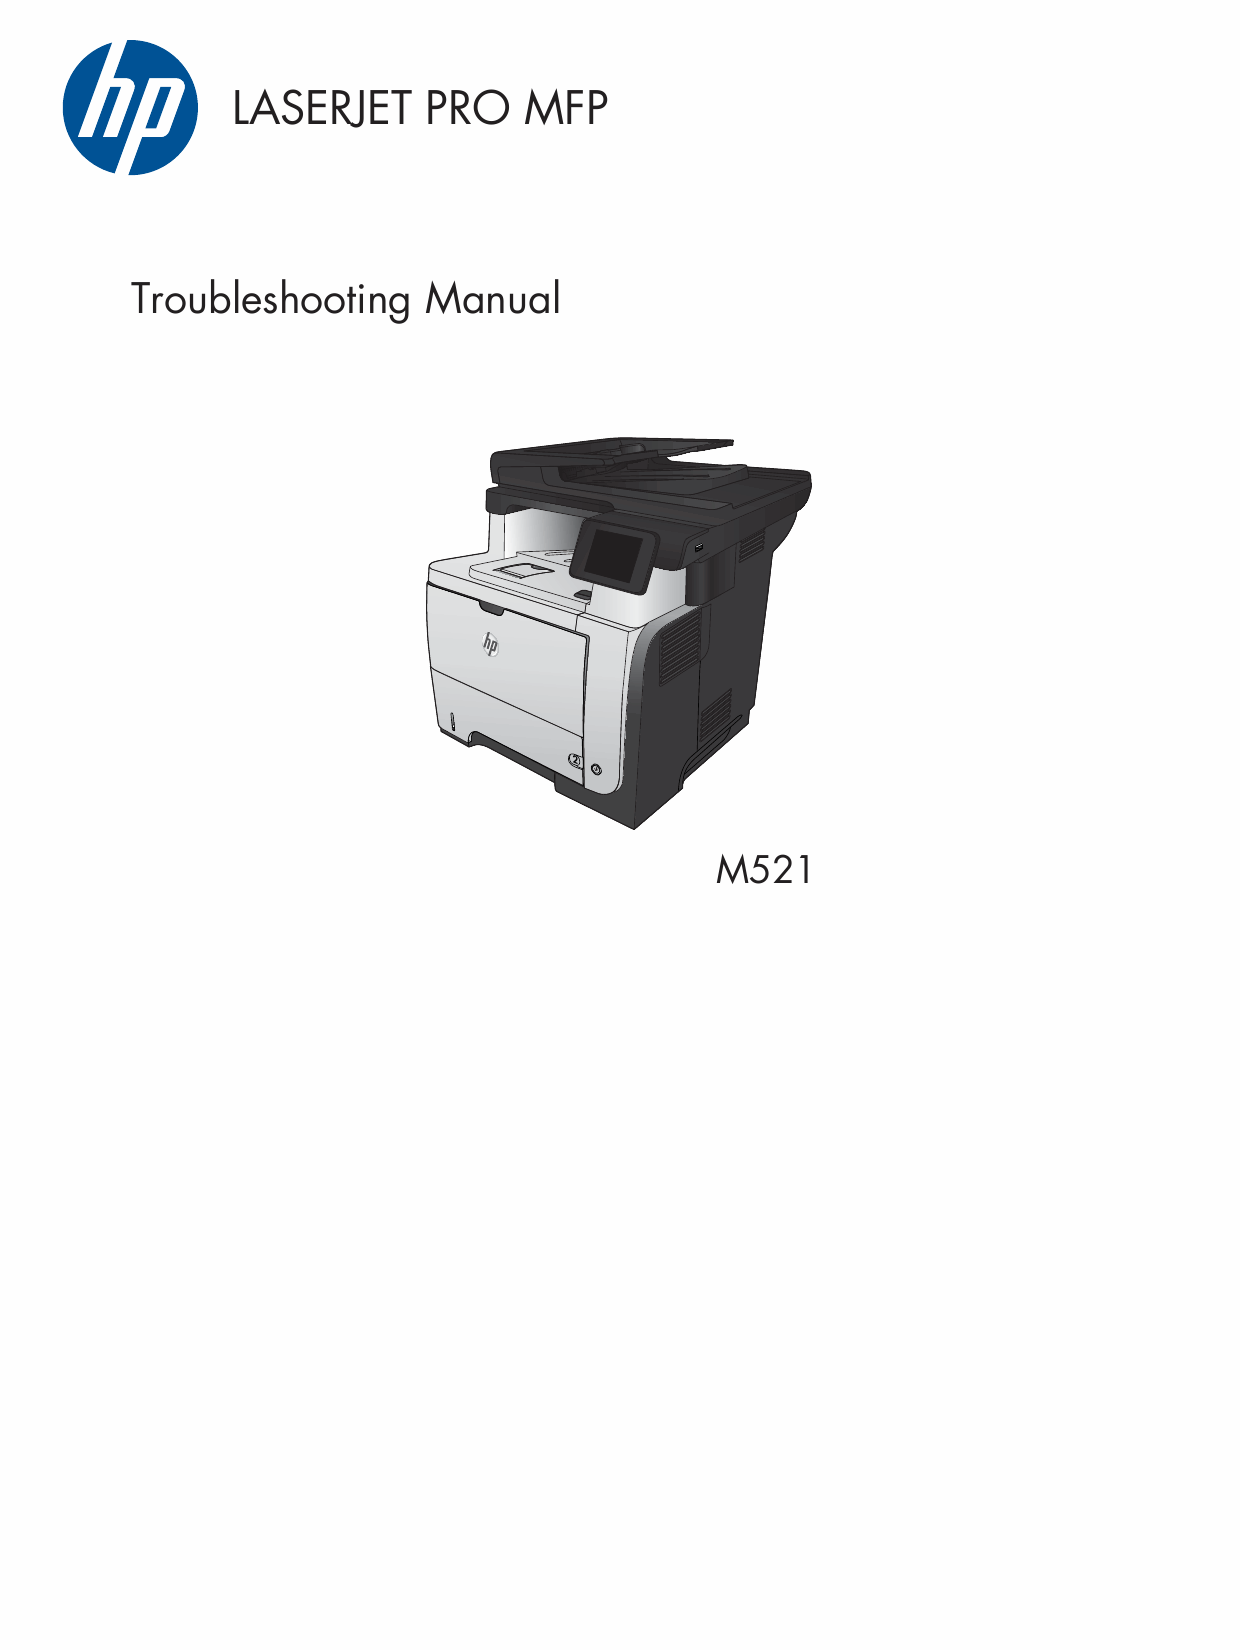 HP LaserJet Pro-MFP M521 dn dw Troubleshooting Manual PDF download-1